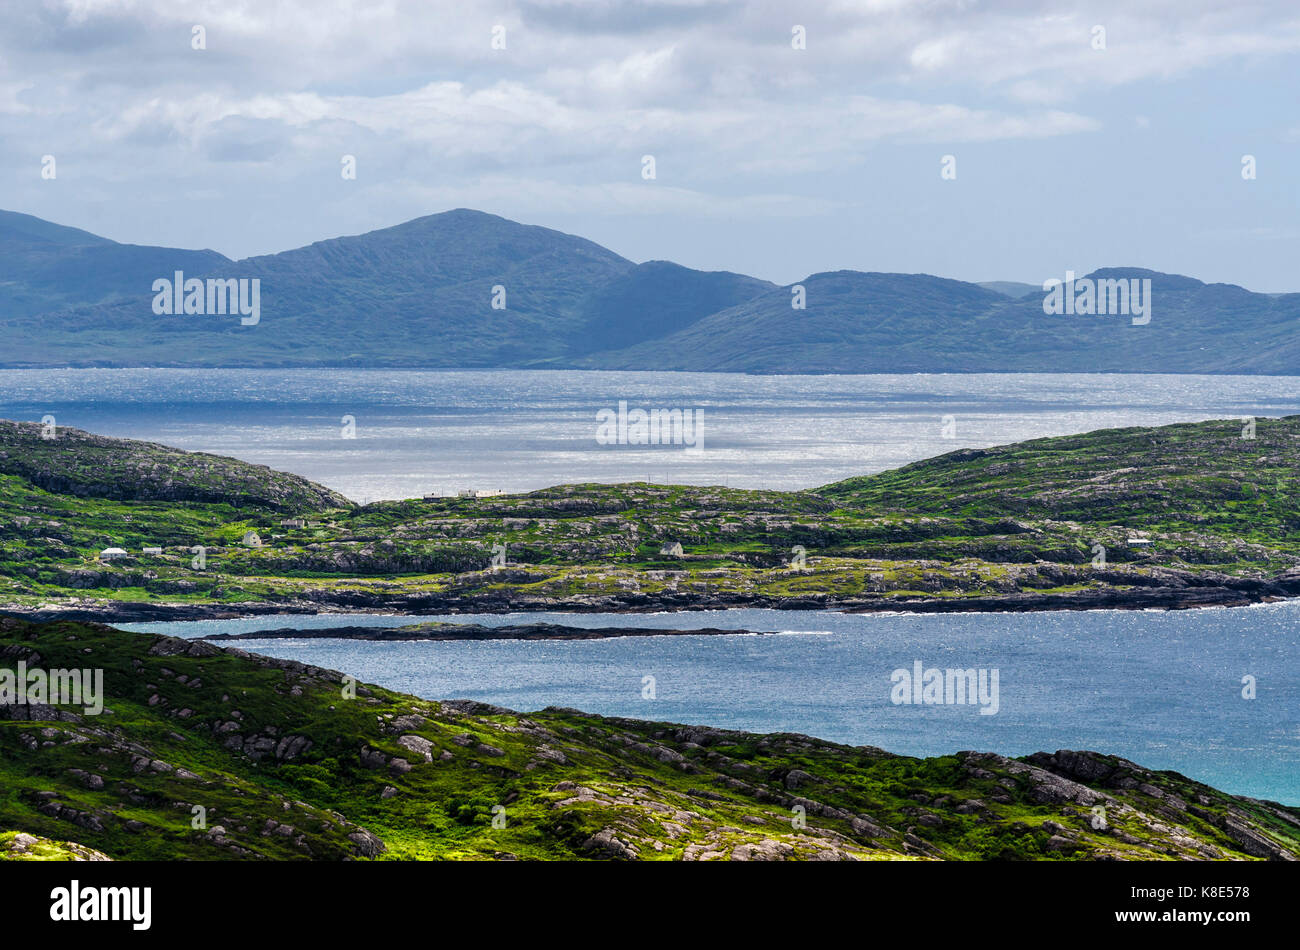 Irlanda, costa atlantica nel ring di Kerry, Irland, Atlantikküste am Ring of Kerry Foto Stock